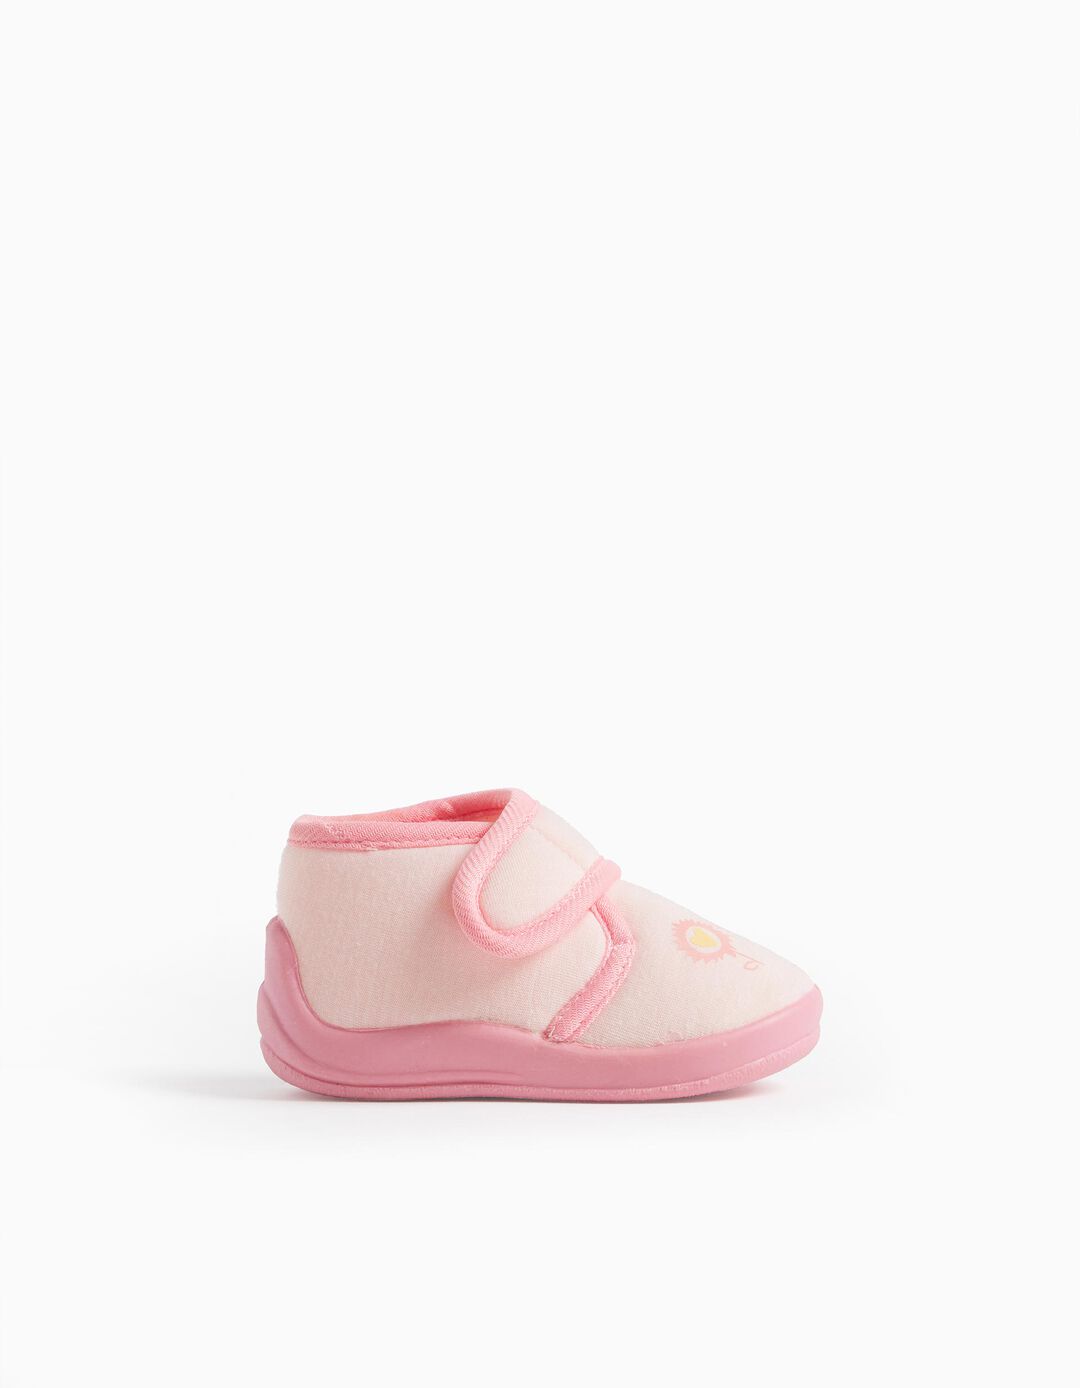 Slippers, Baby Girls, Light Pink